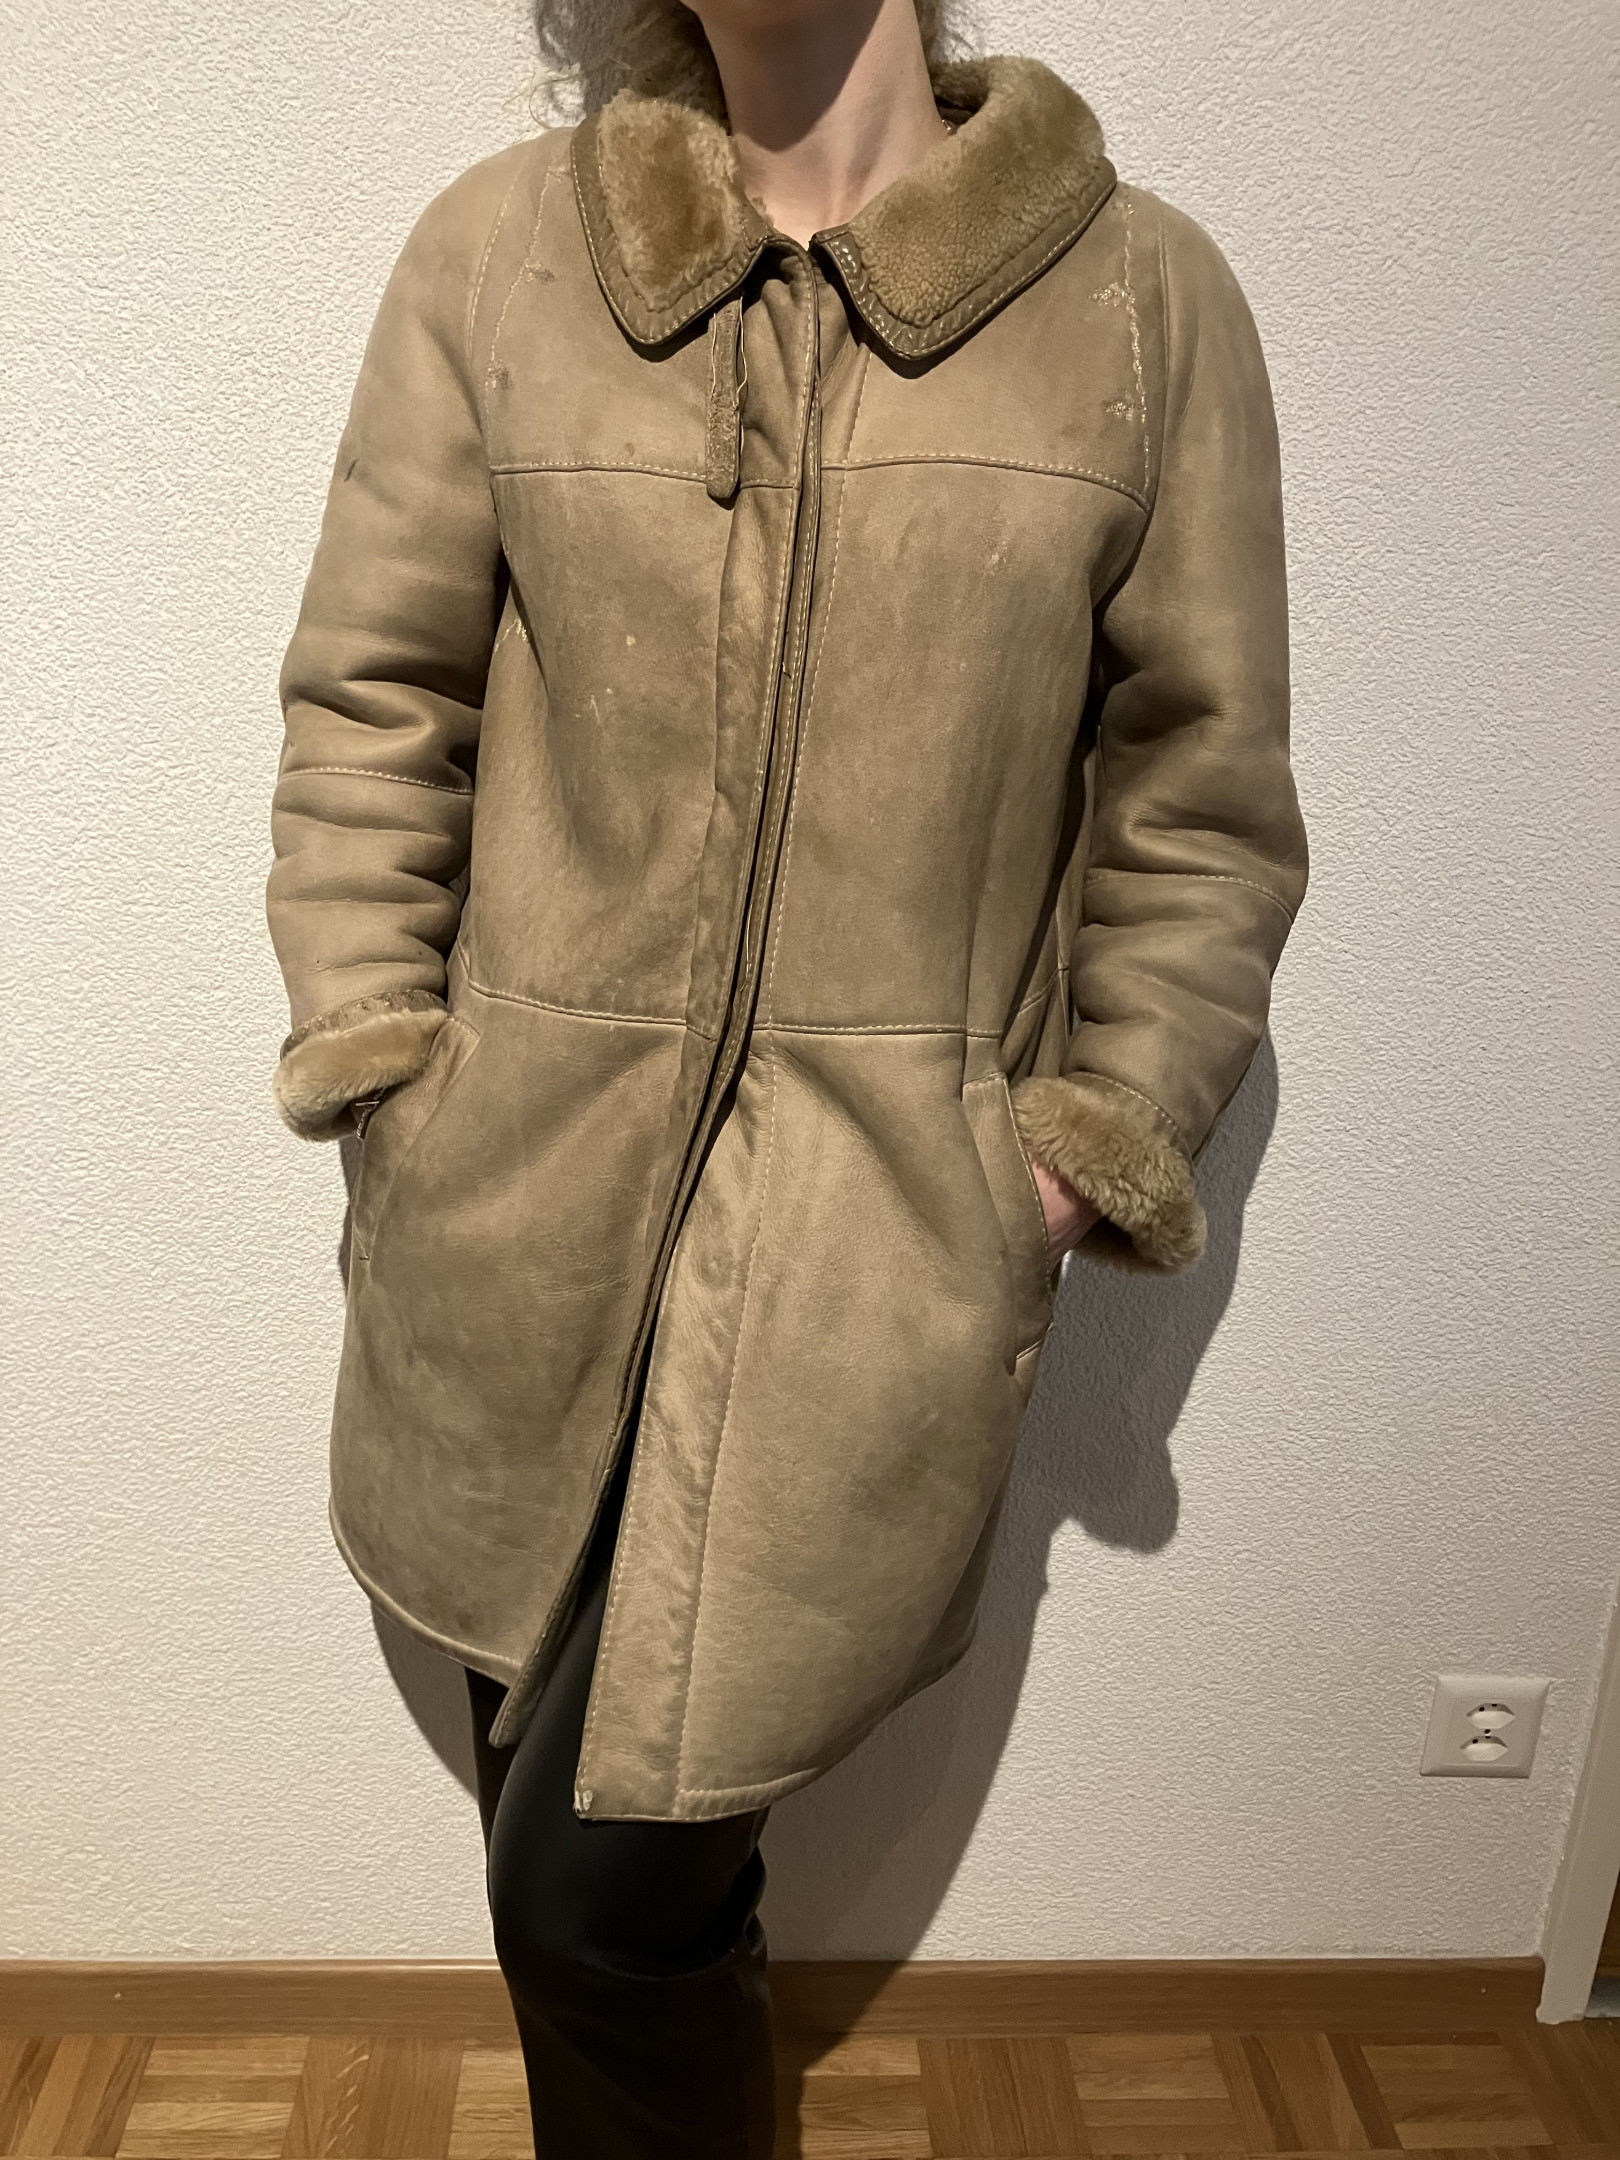 Vintage super warm coat